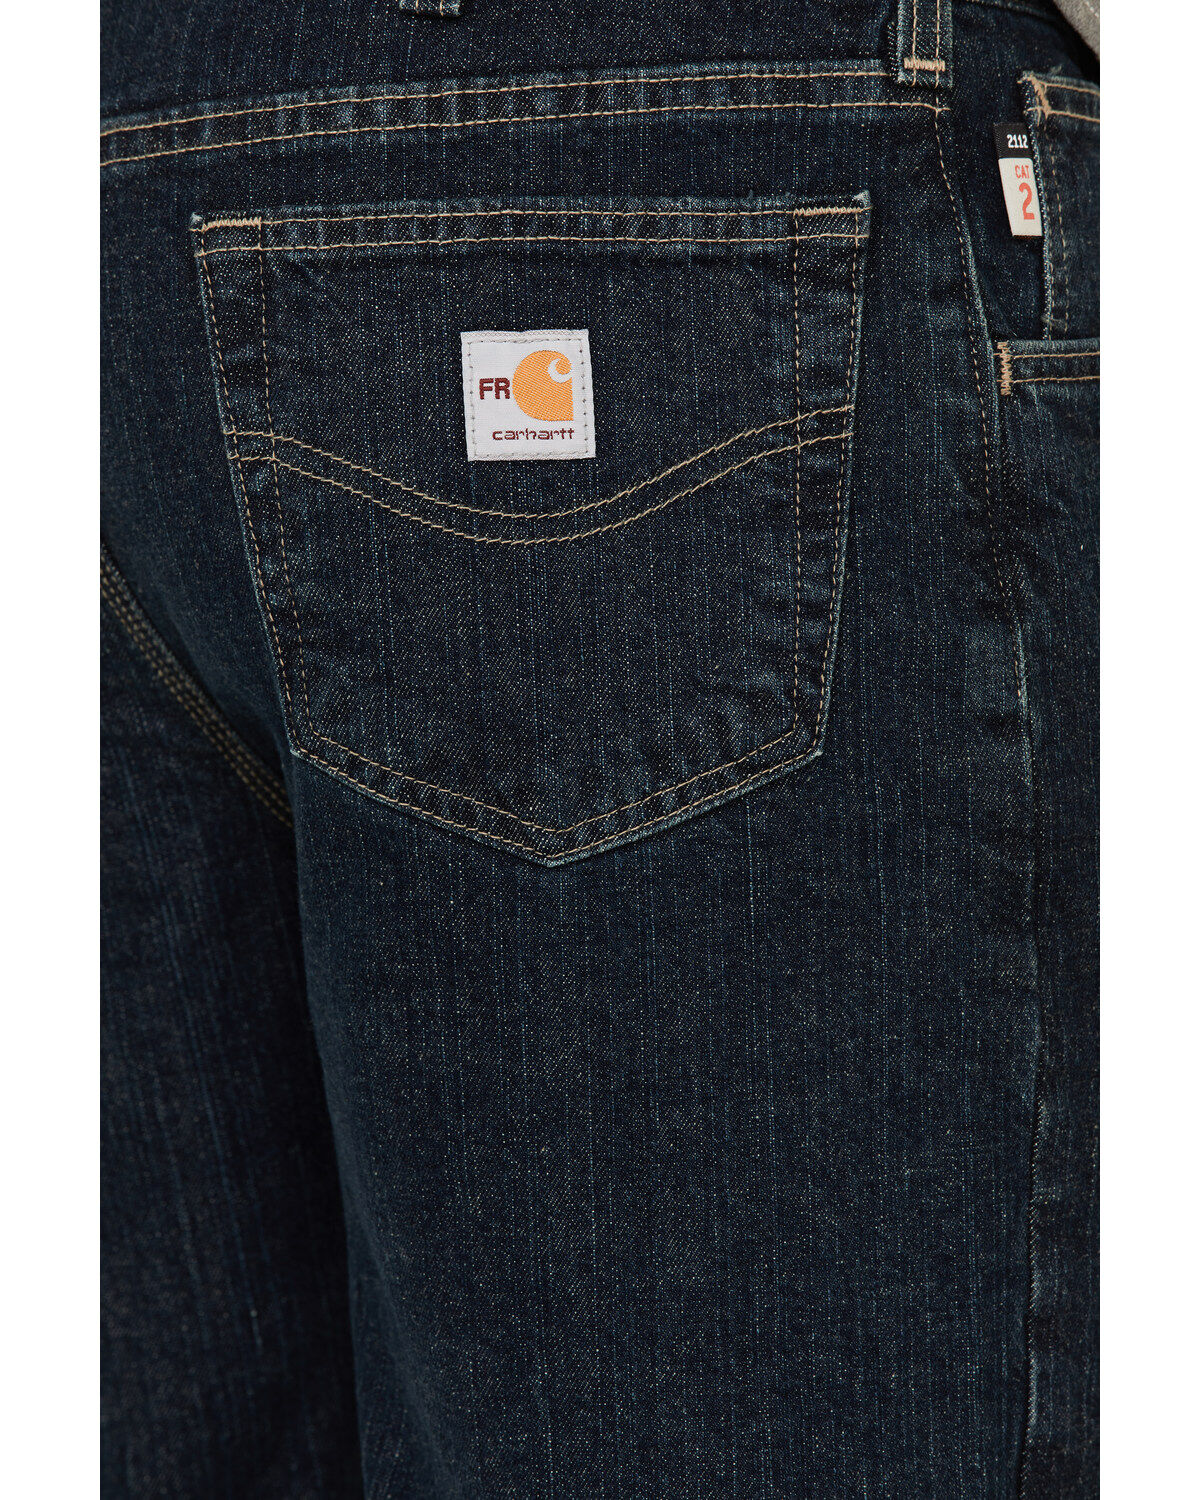 Carhartt FR Flame Resistant Jeans Denim Twill 15.6 ATPV CAT 2 Blue Men's 38x30